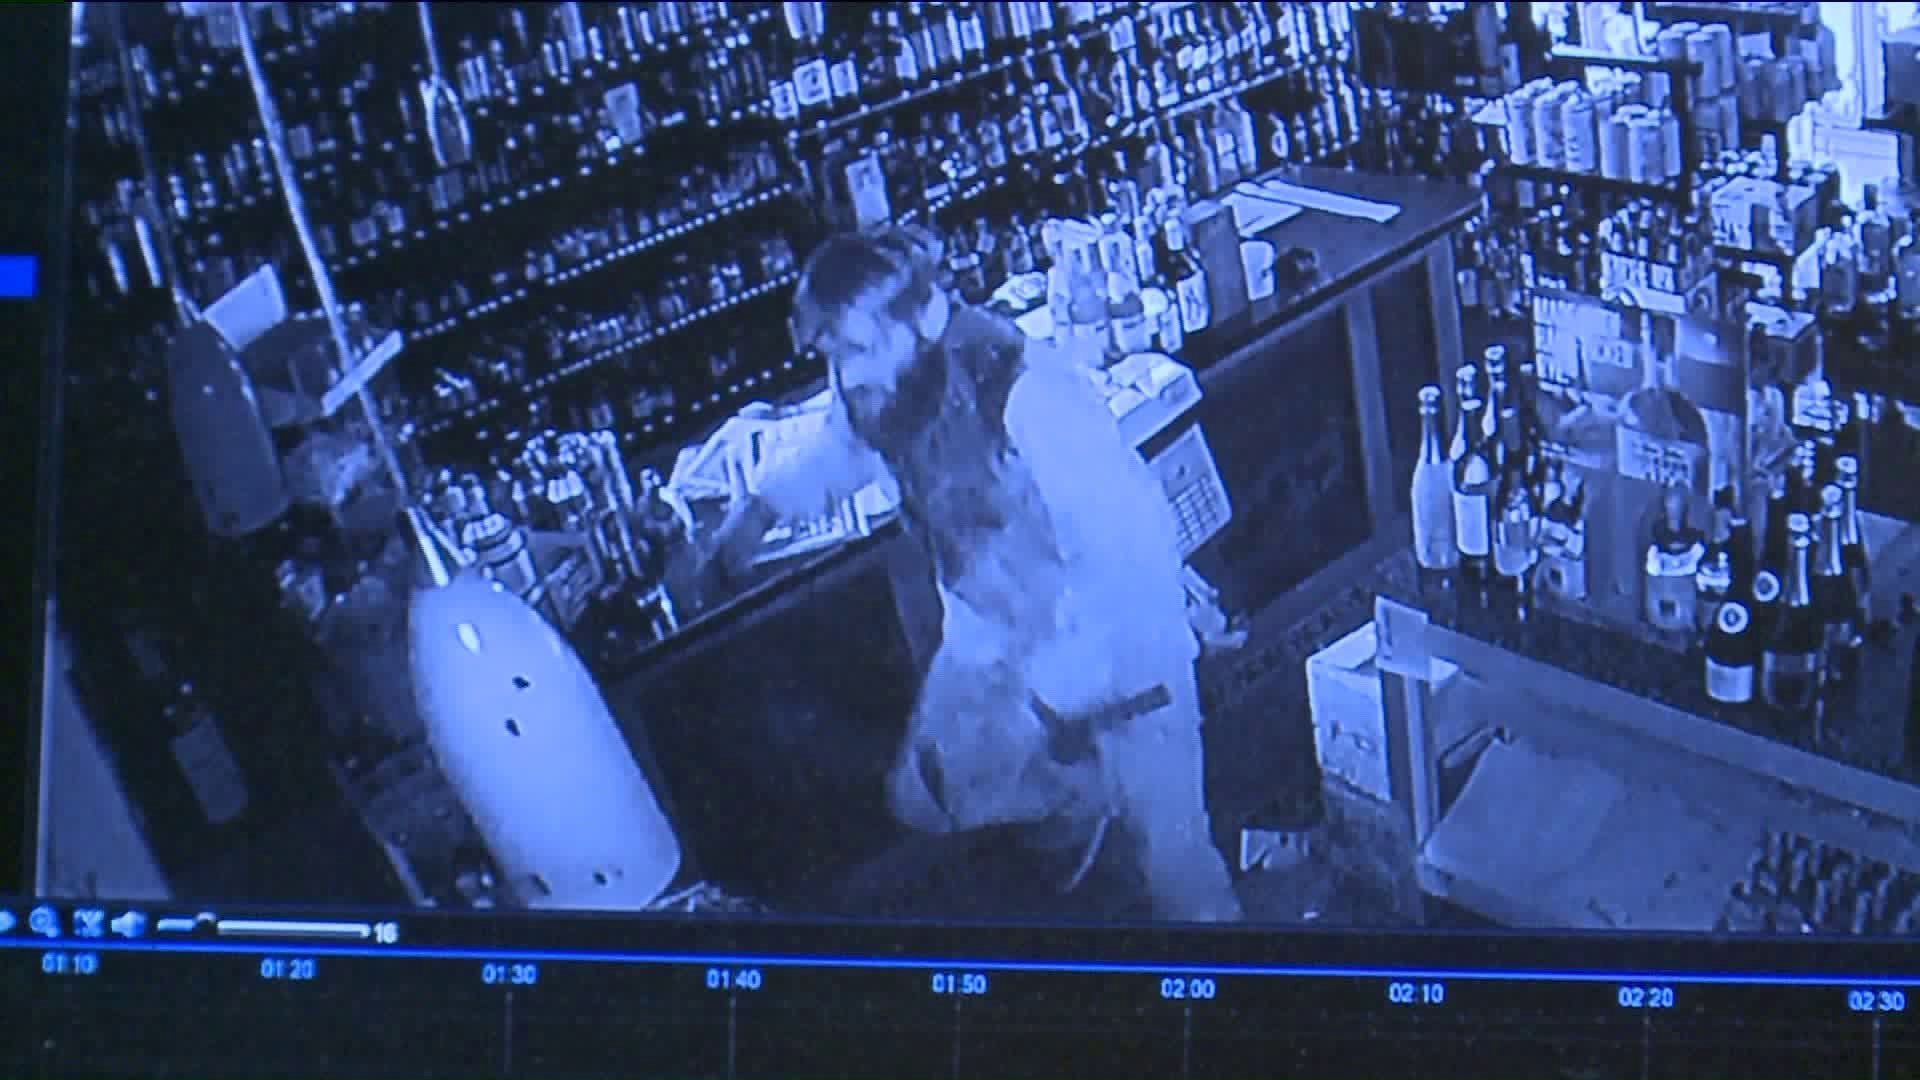 Liquor store robbery